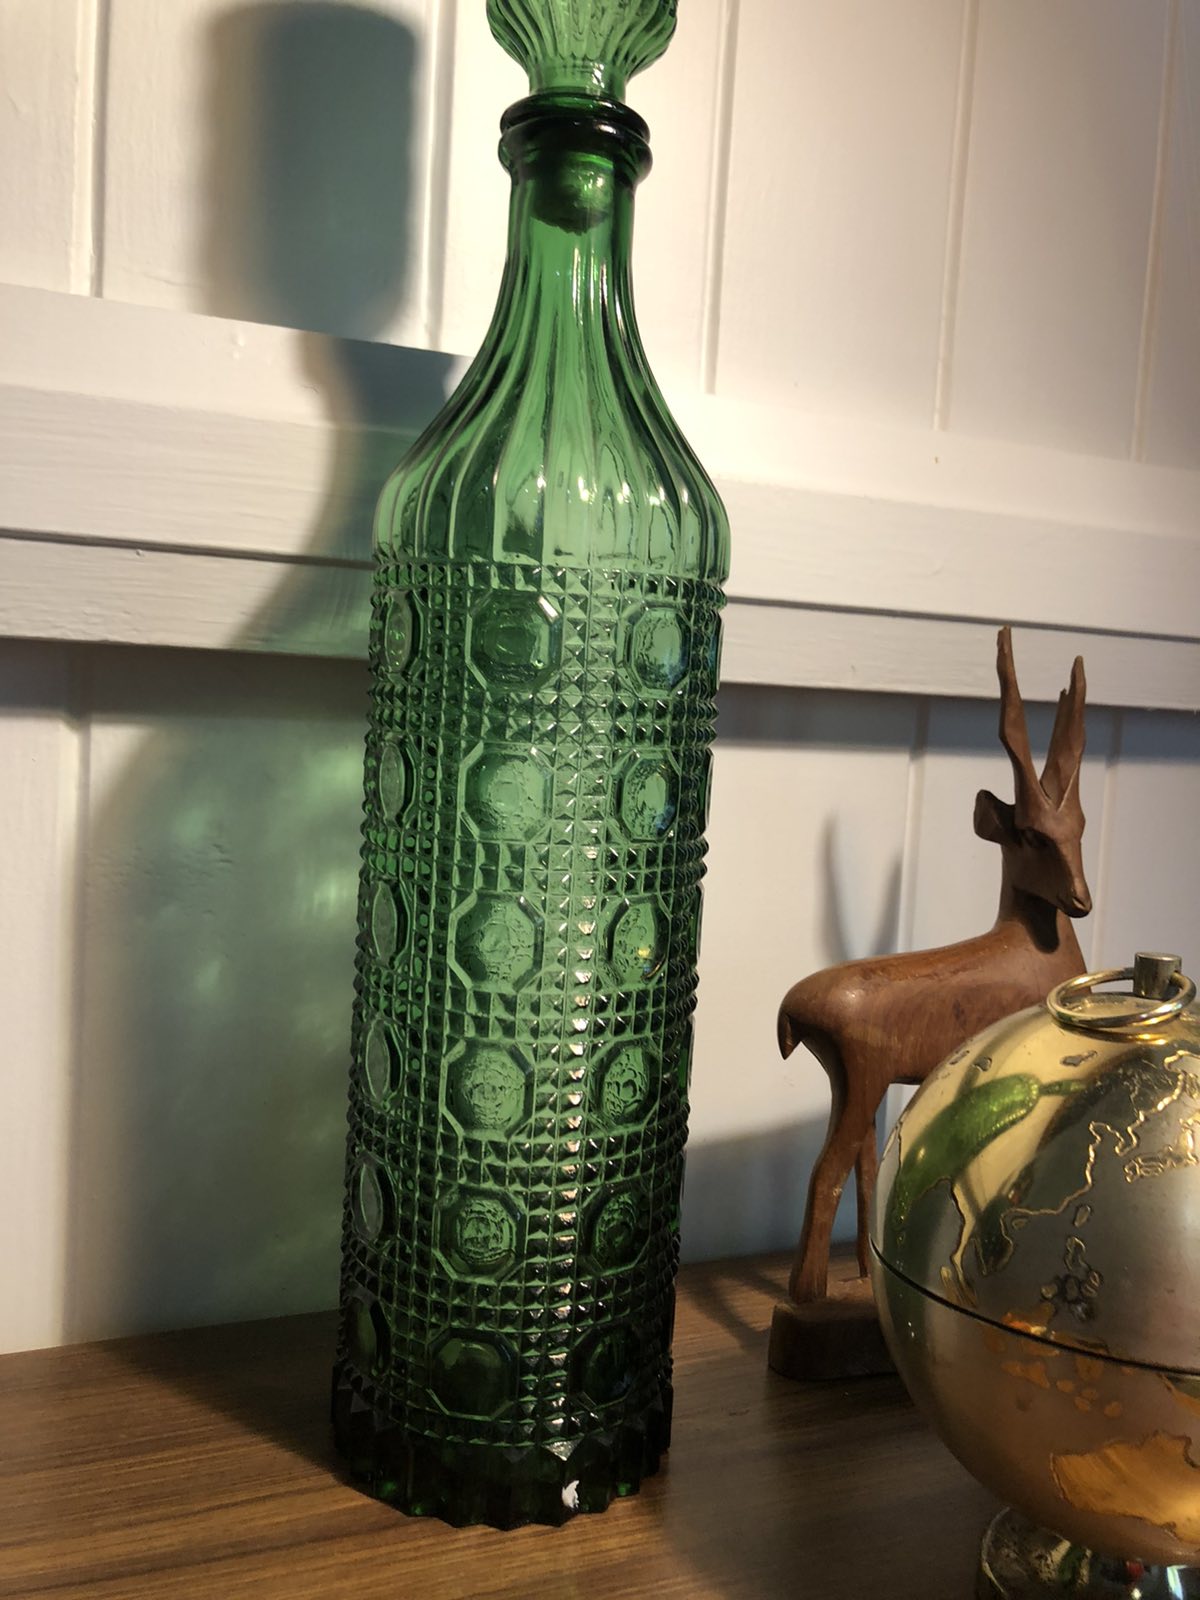 Green ravioli genie bottle